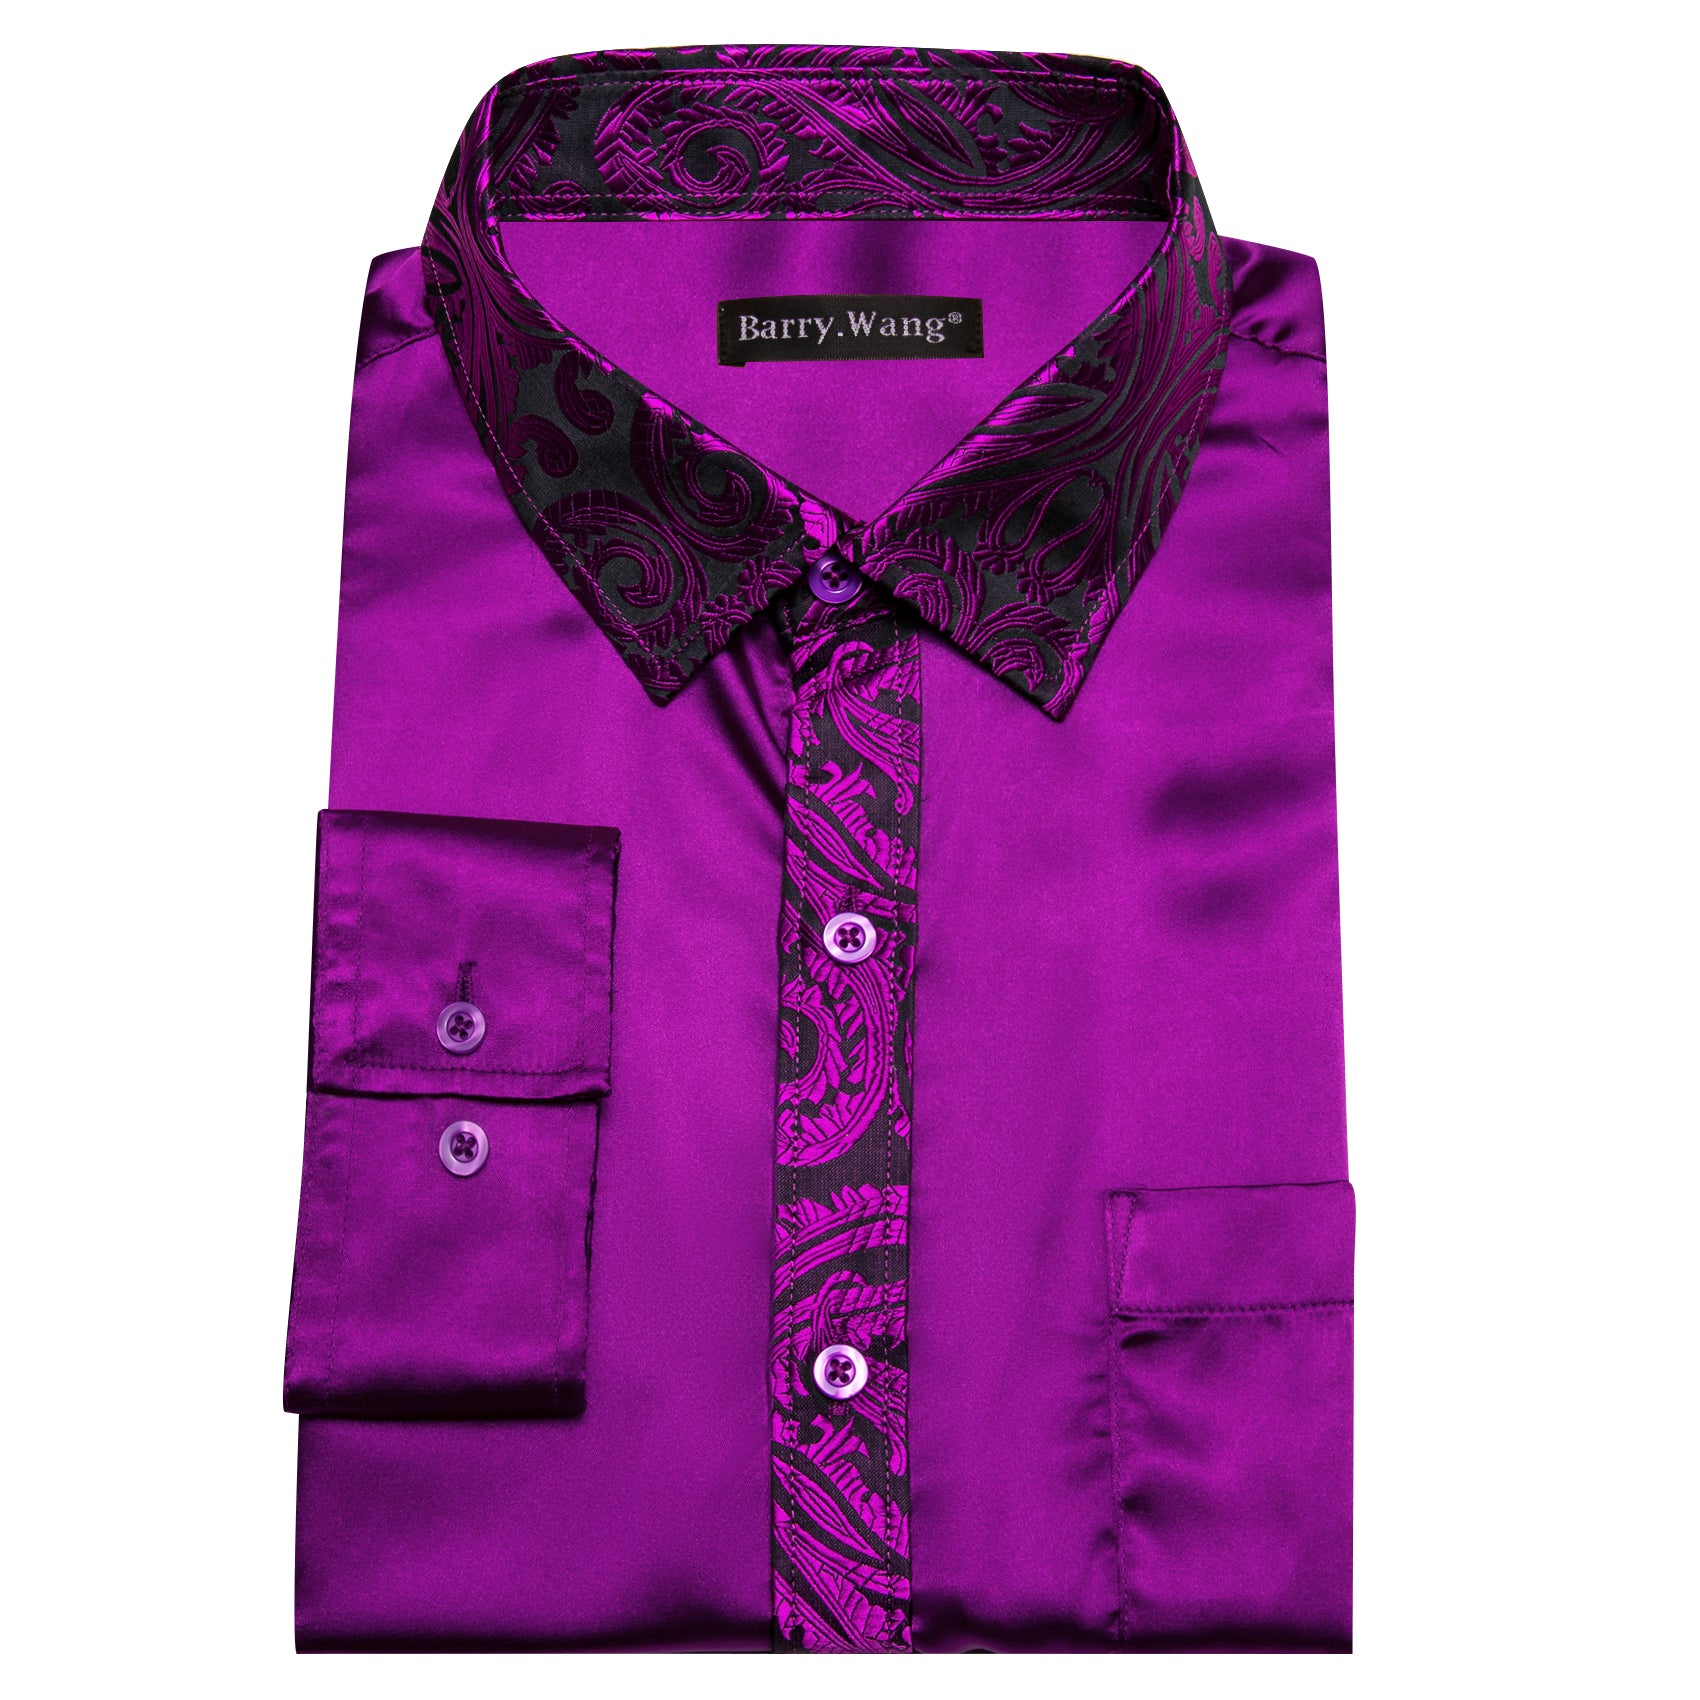 Barry.wang Purple Splicing Men Business Shirt